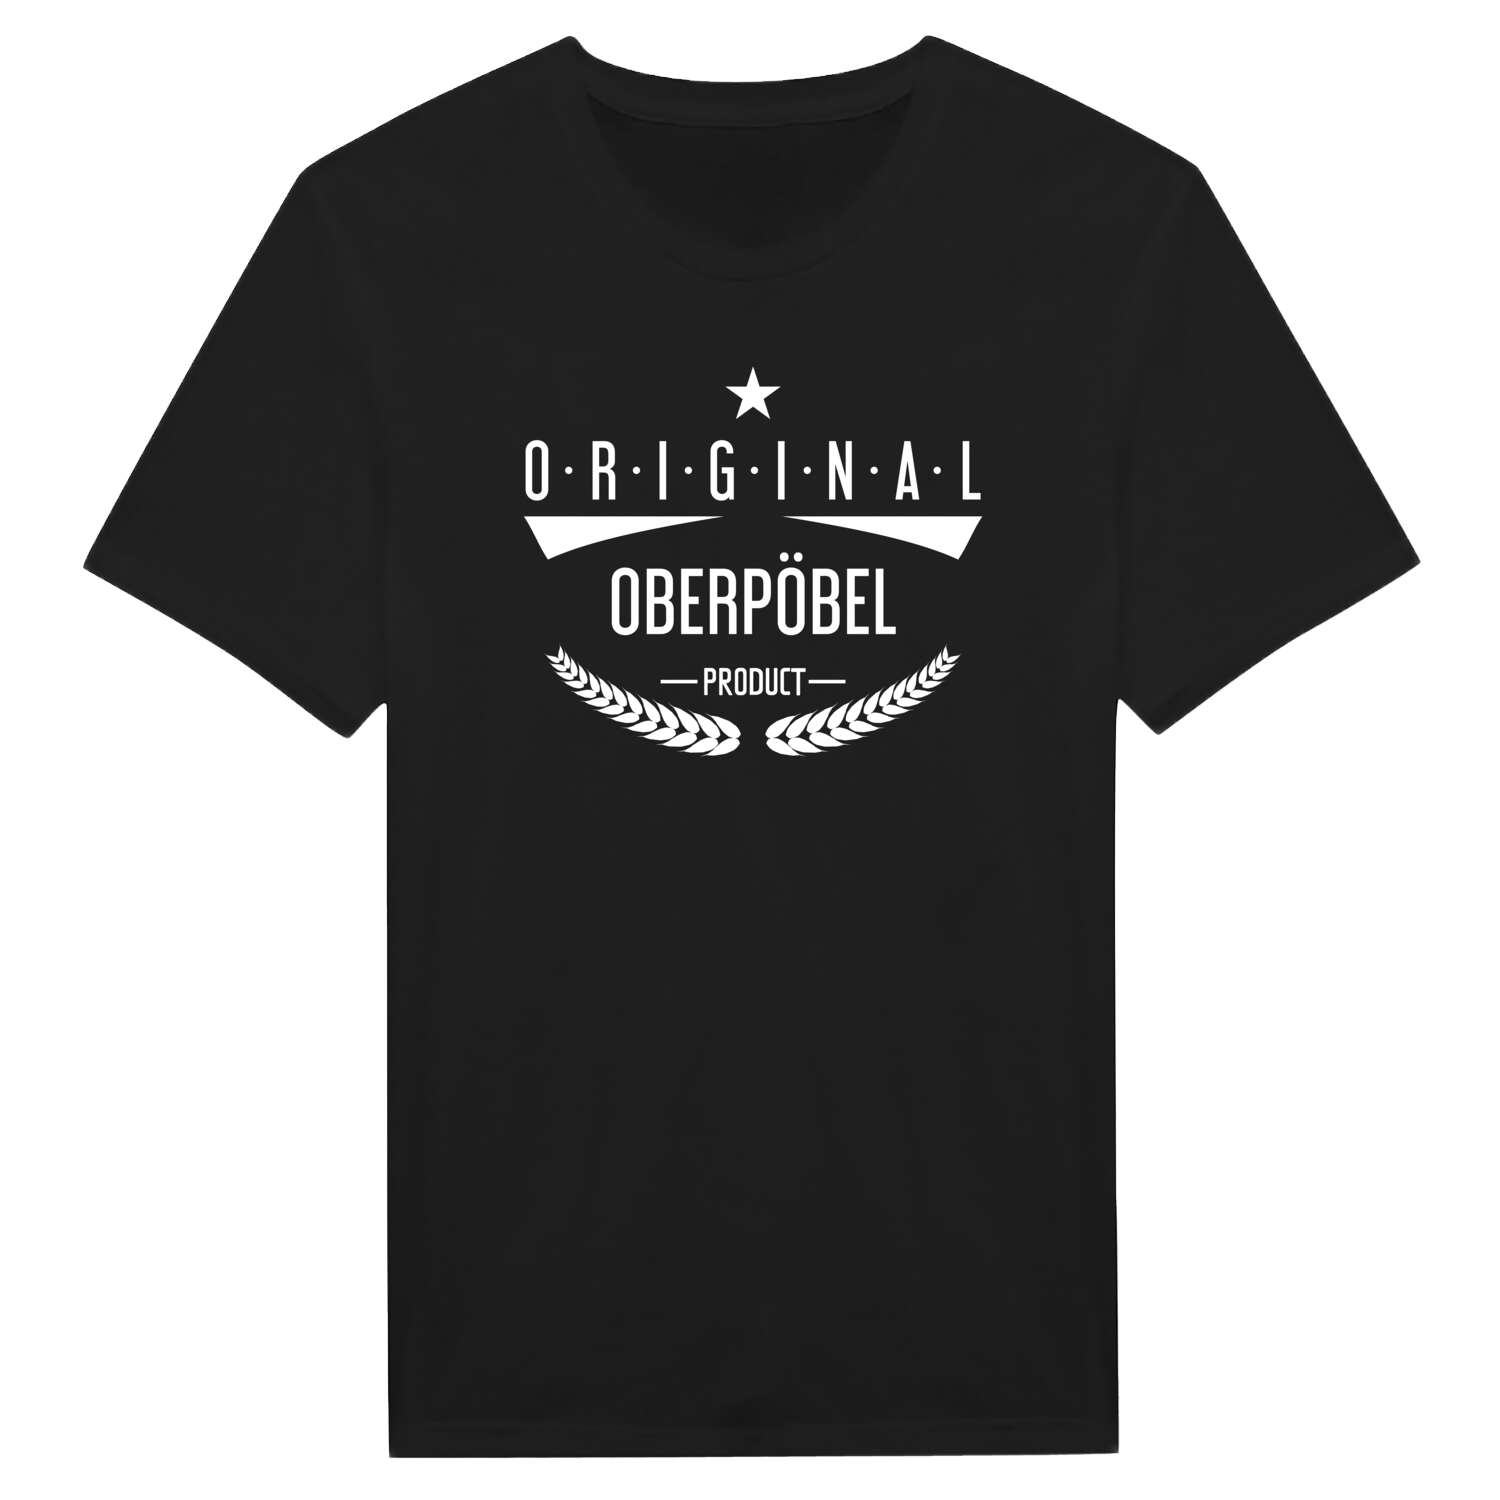 Oberpöbel T-Shirt »Original Product«